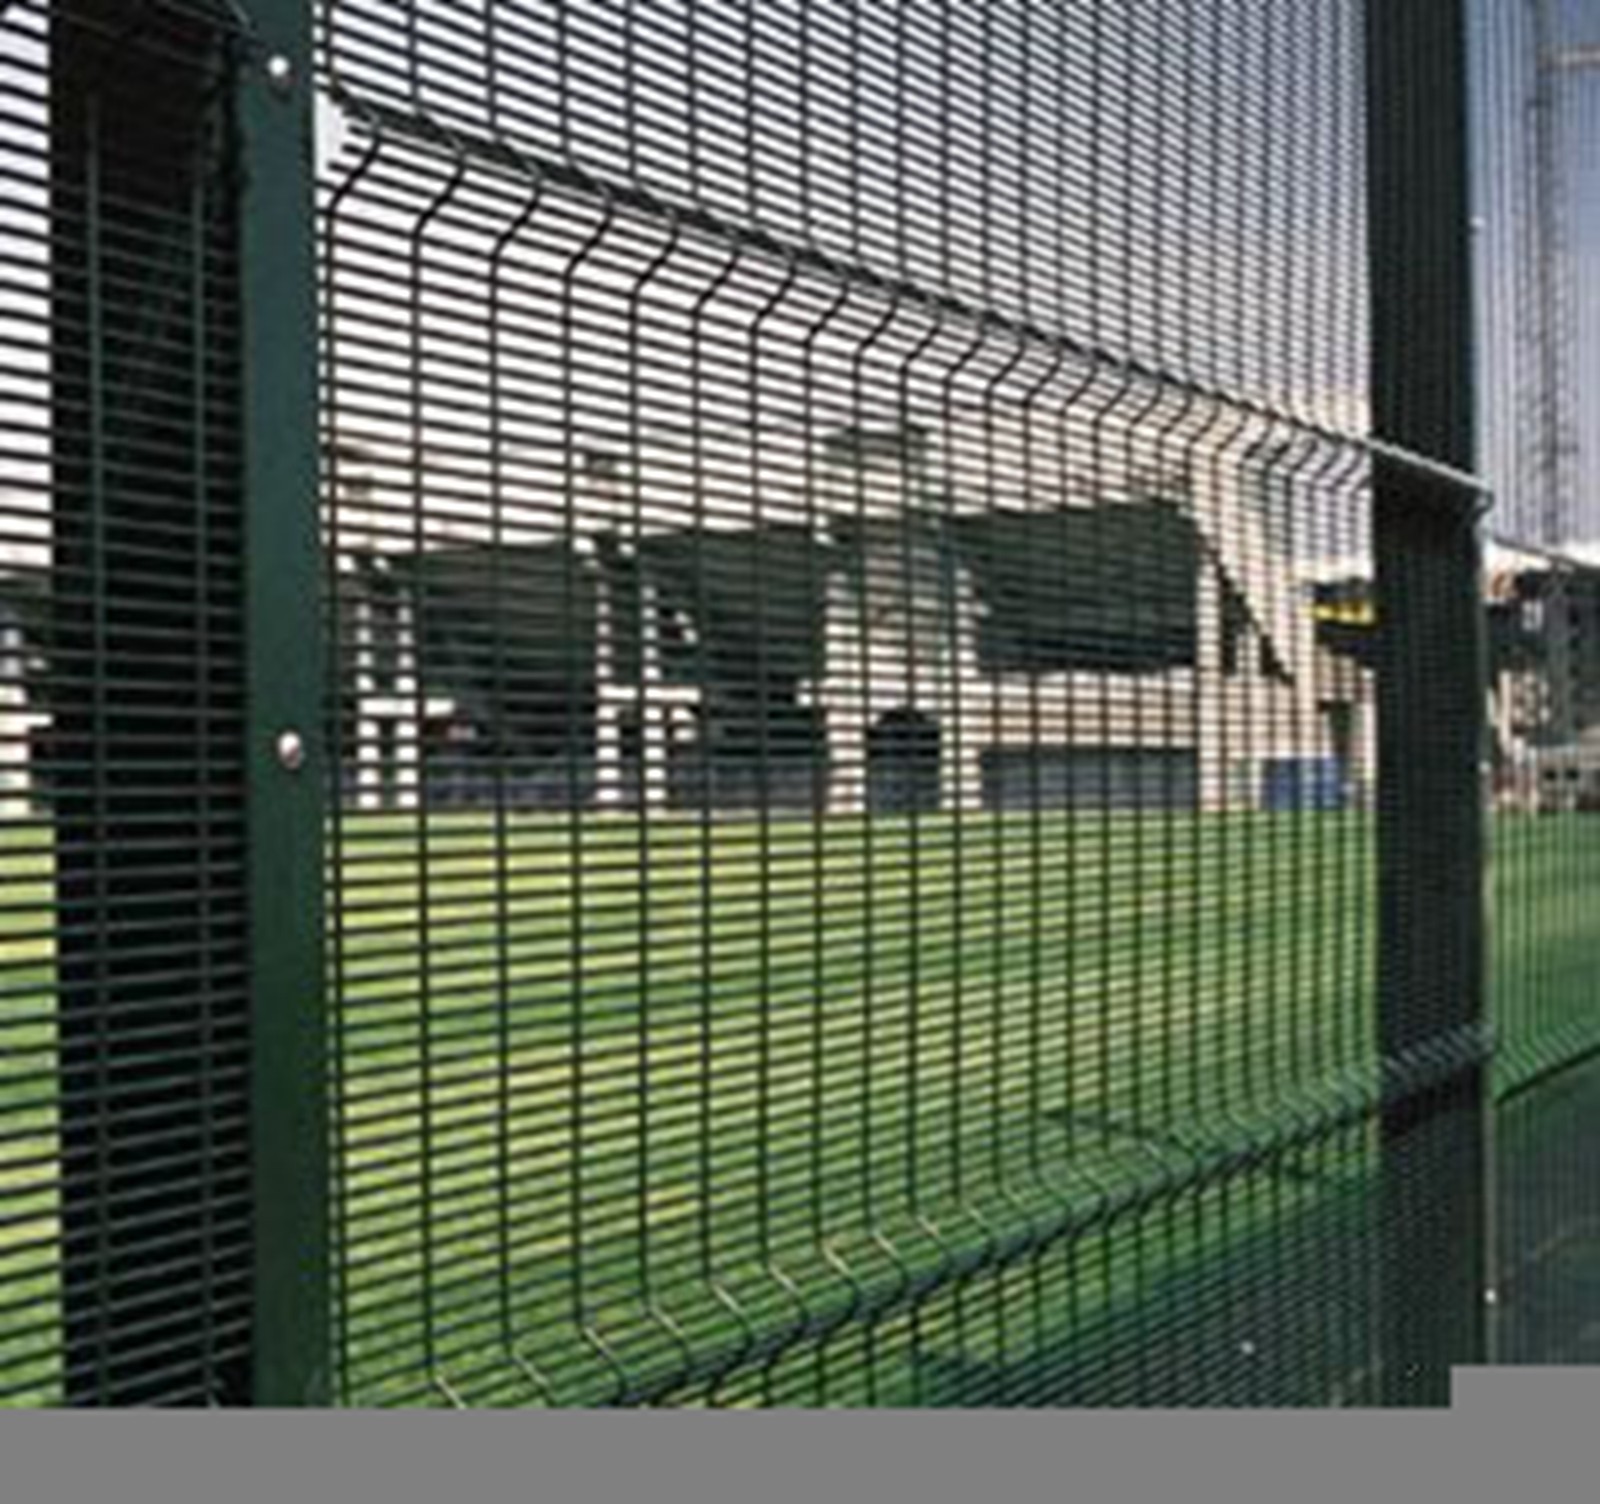 358 security fence002.jpg